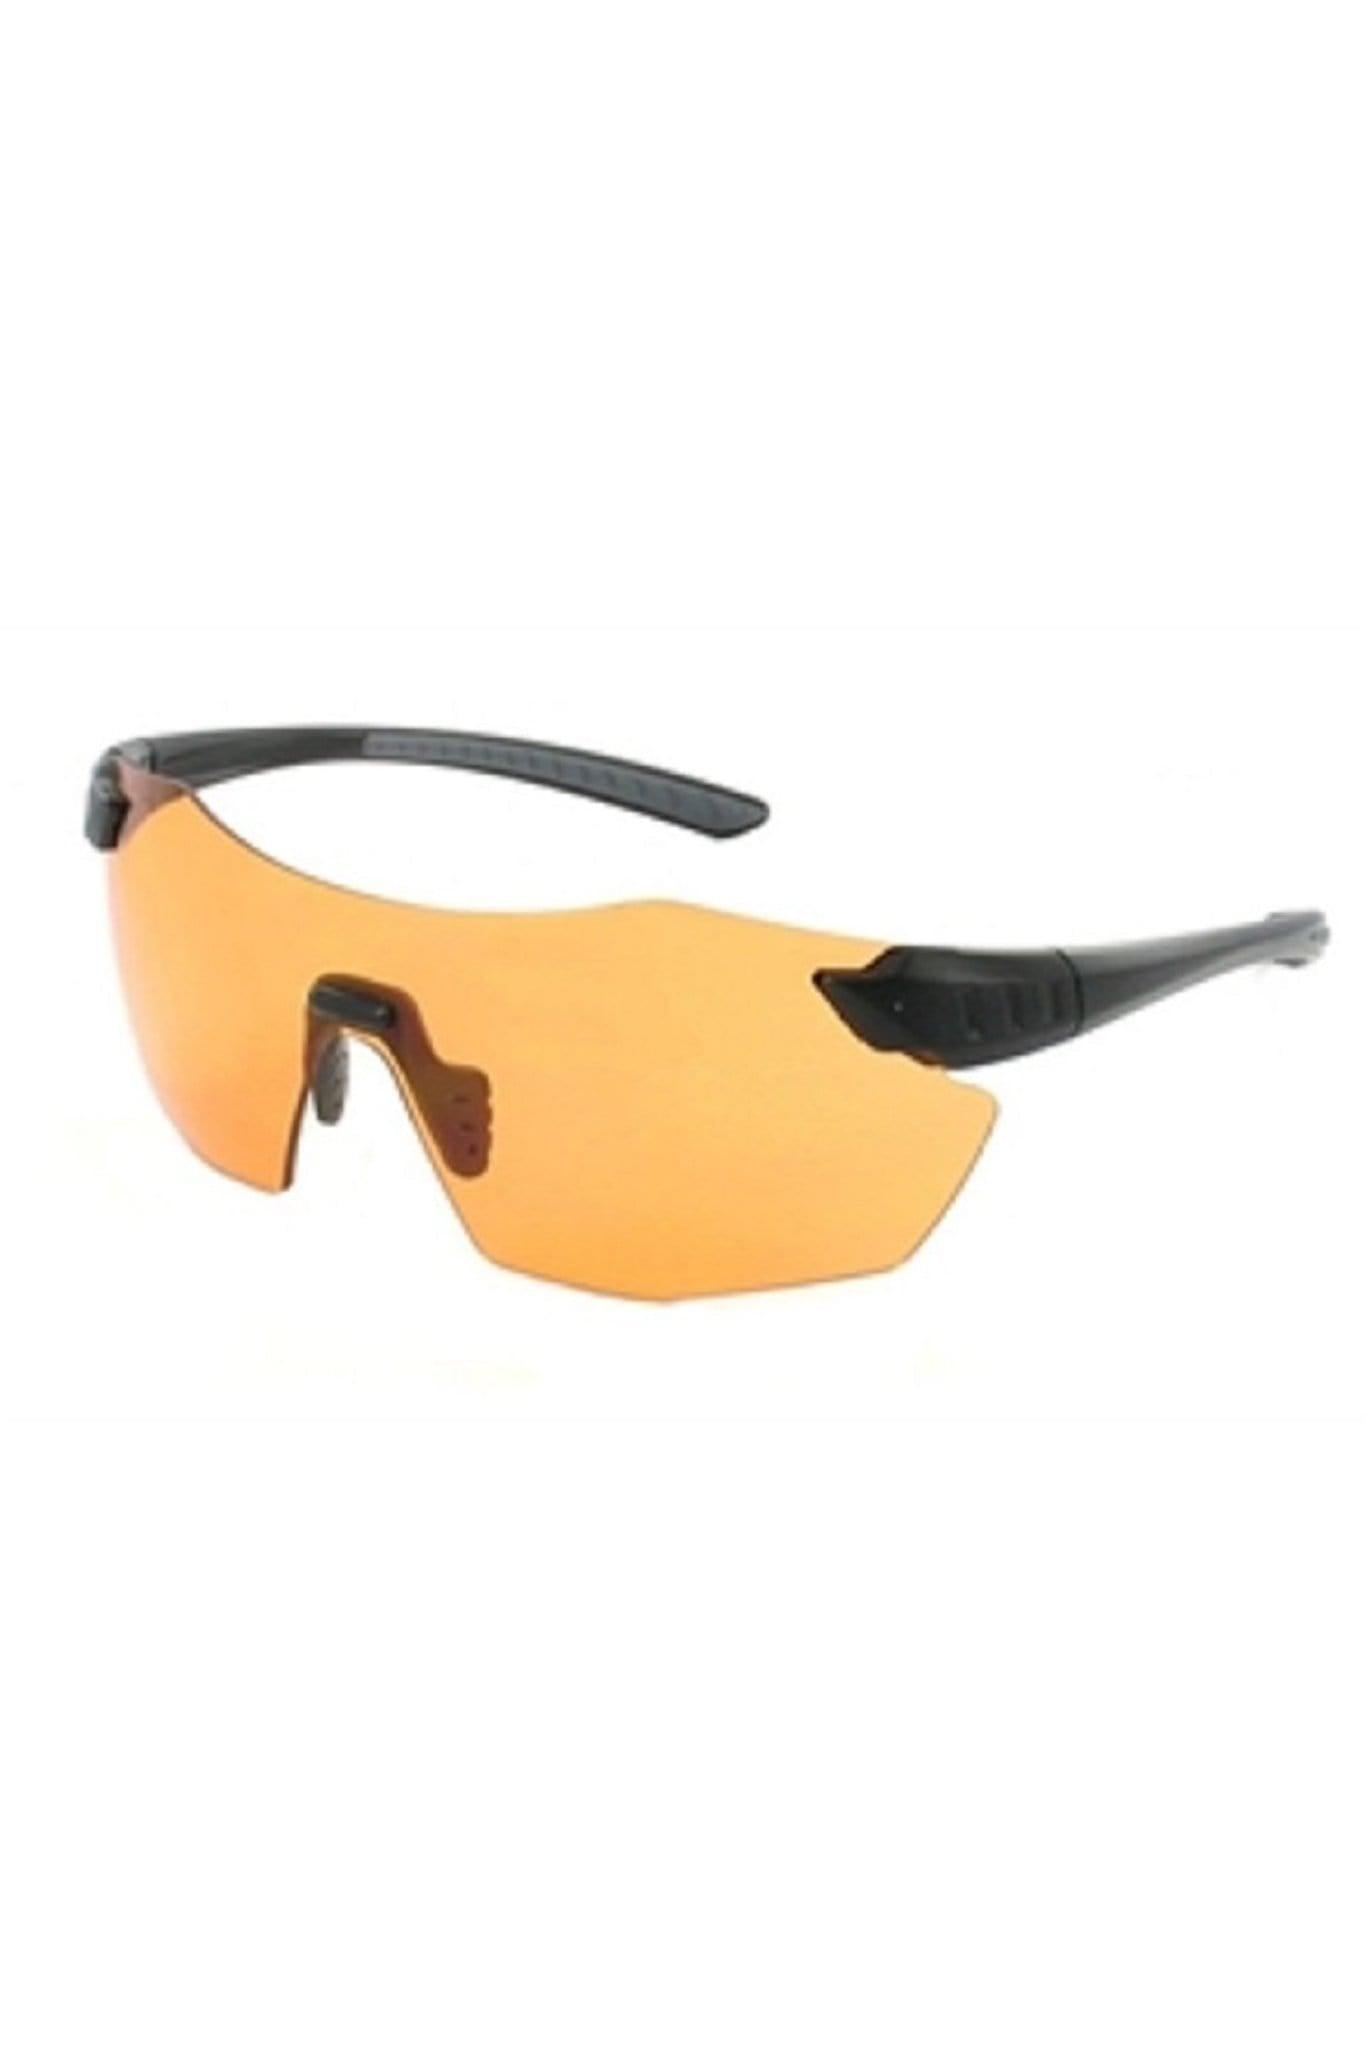 Evolution Eyewear & Ear Protection Orange Evolution Chameleon - Single Lens Eyewear - (8 colours available)